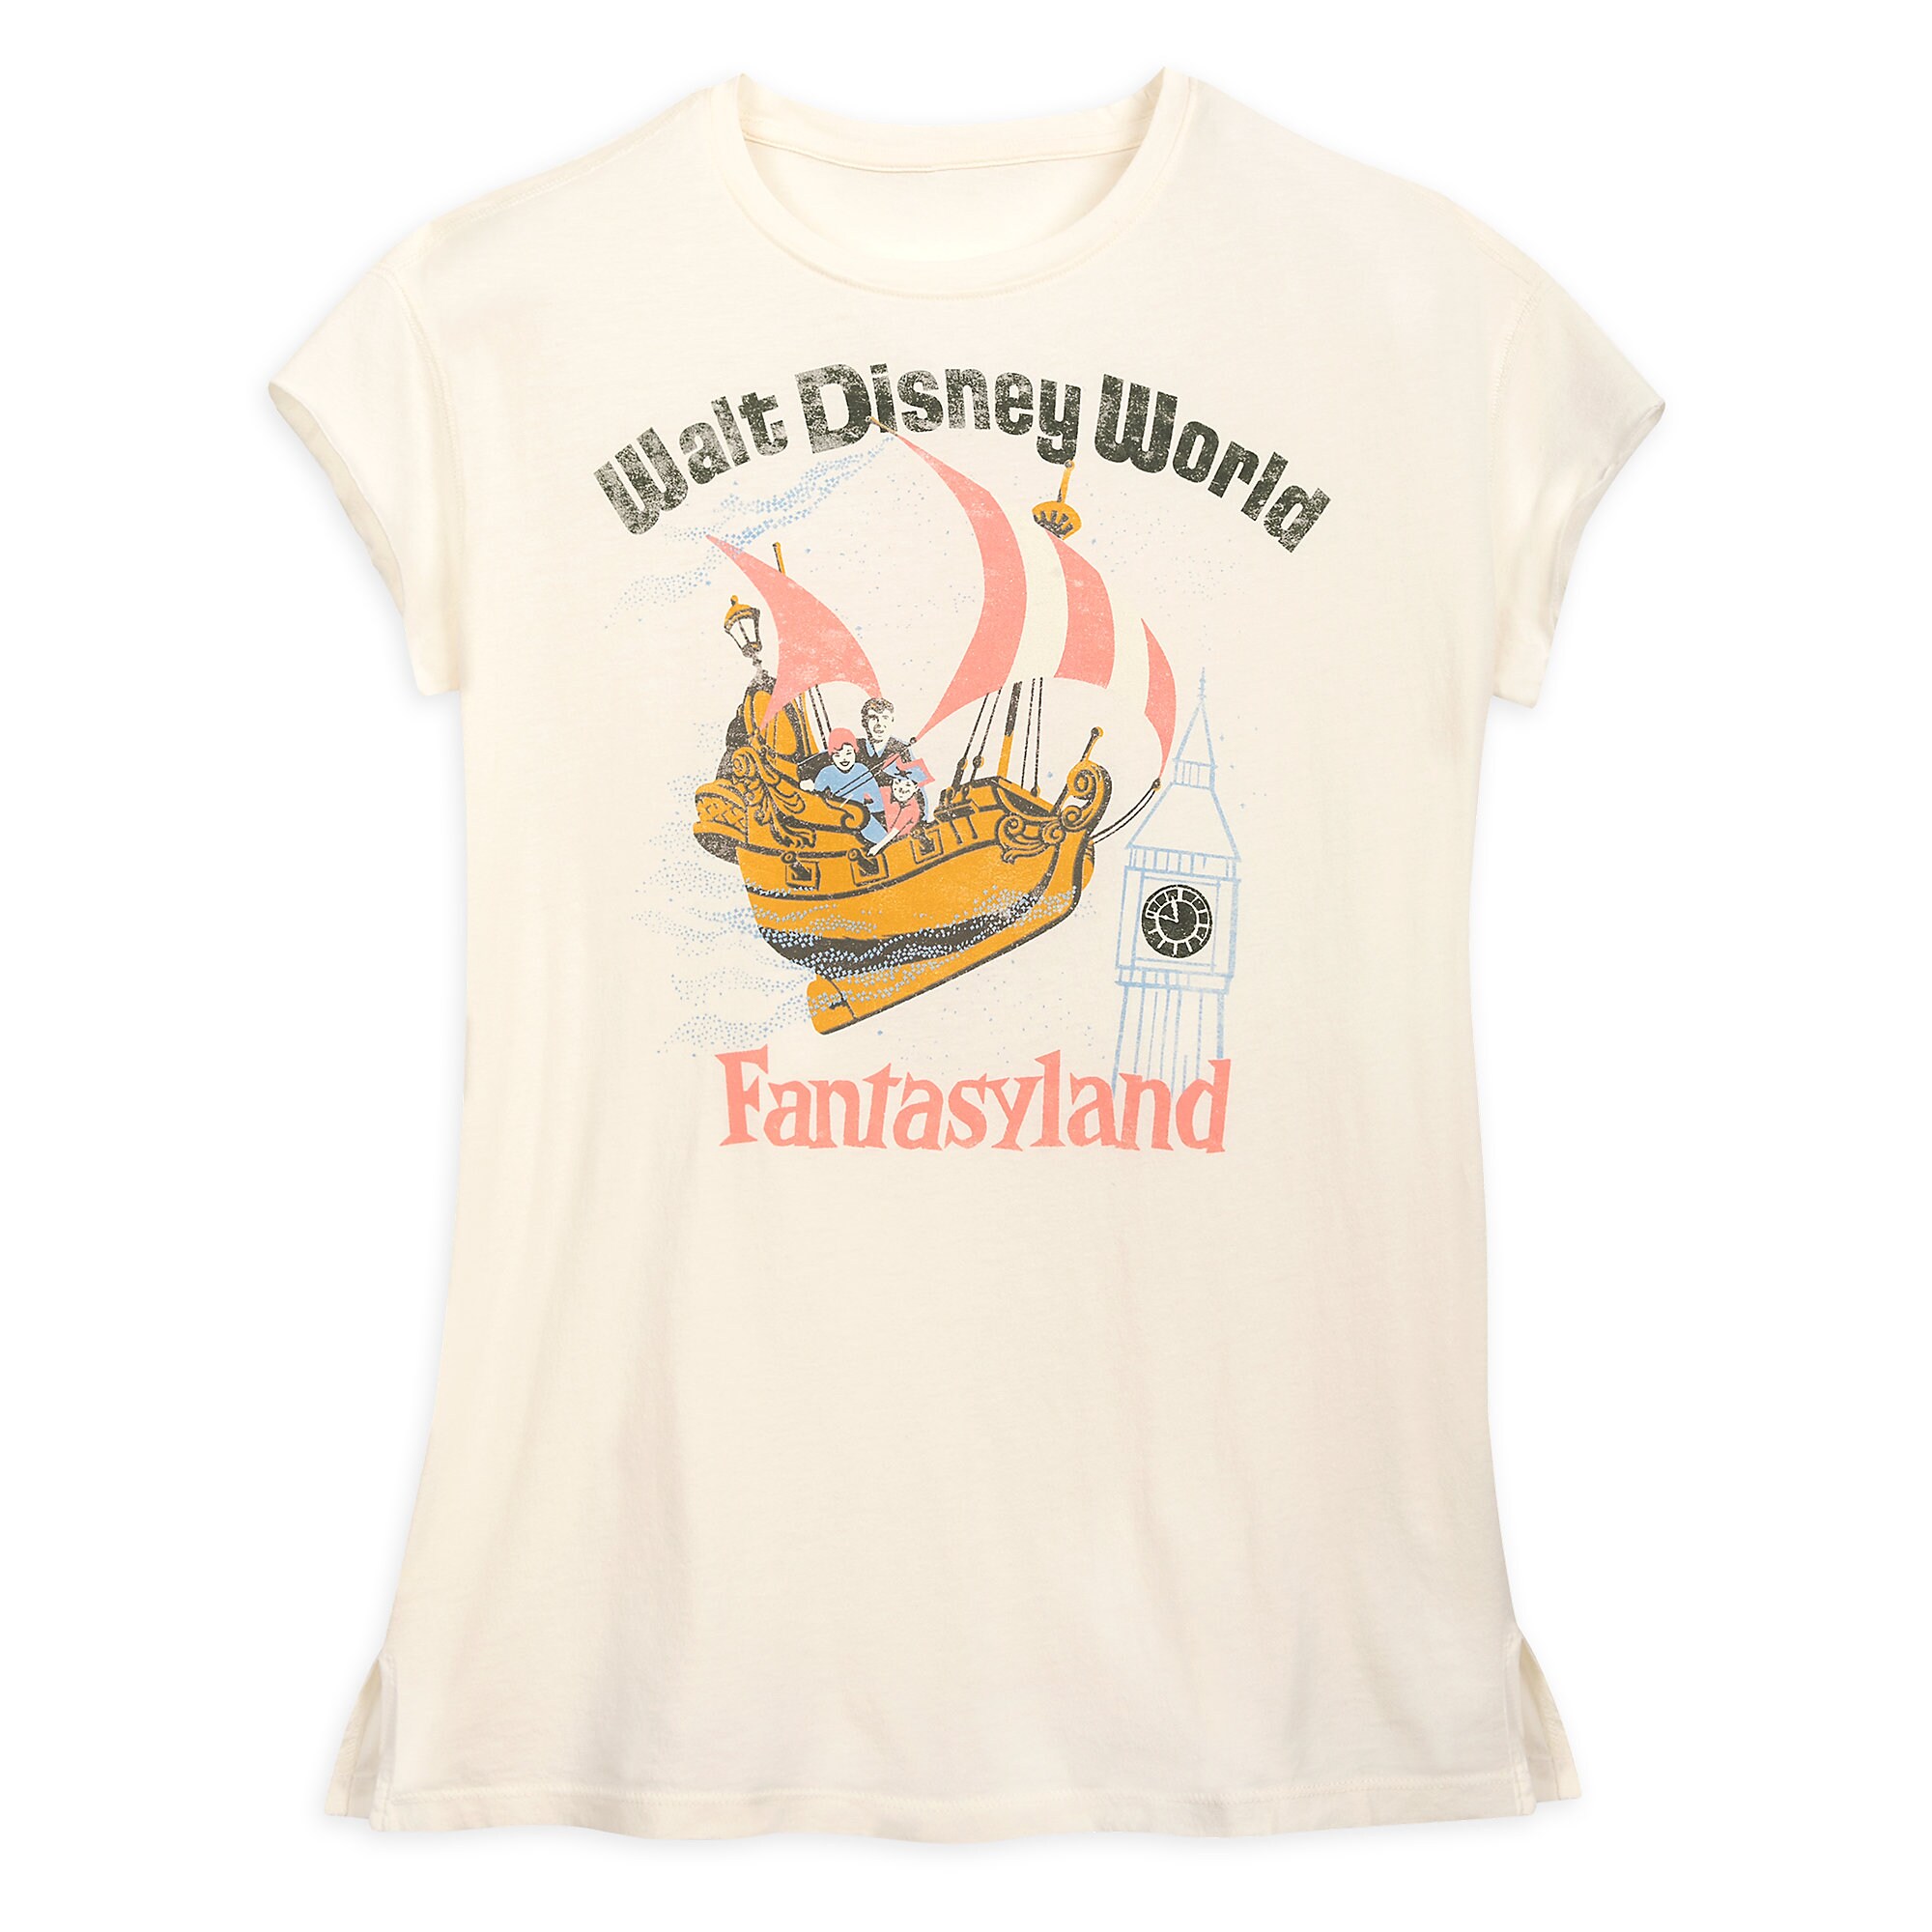 Fantasyland T-Shirt for Women by Junk Food - Walt Disney World